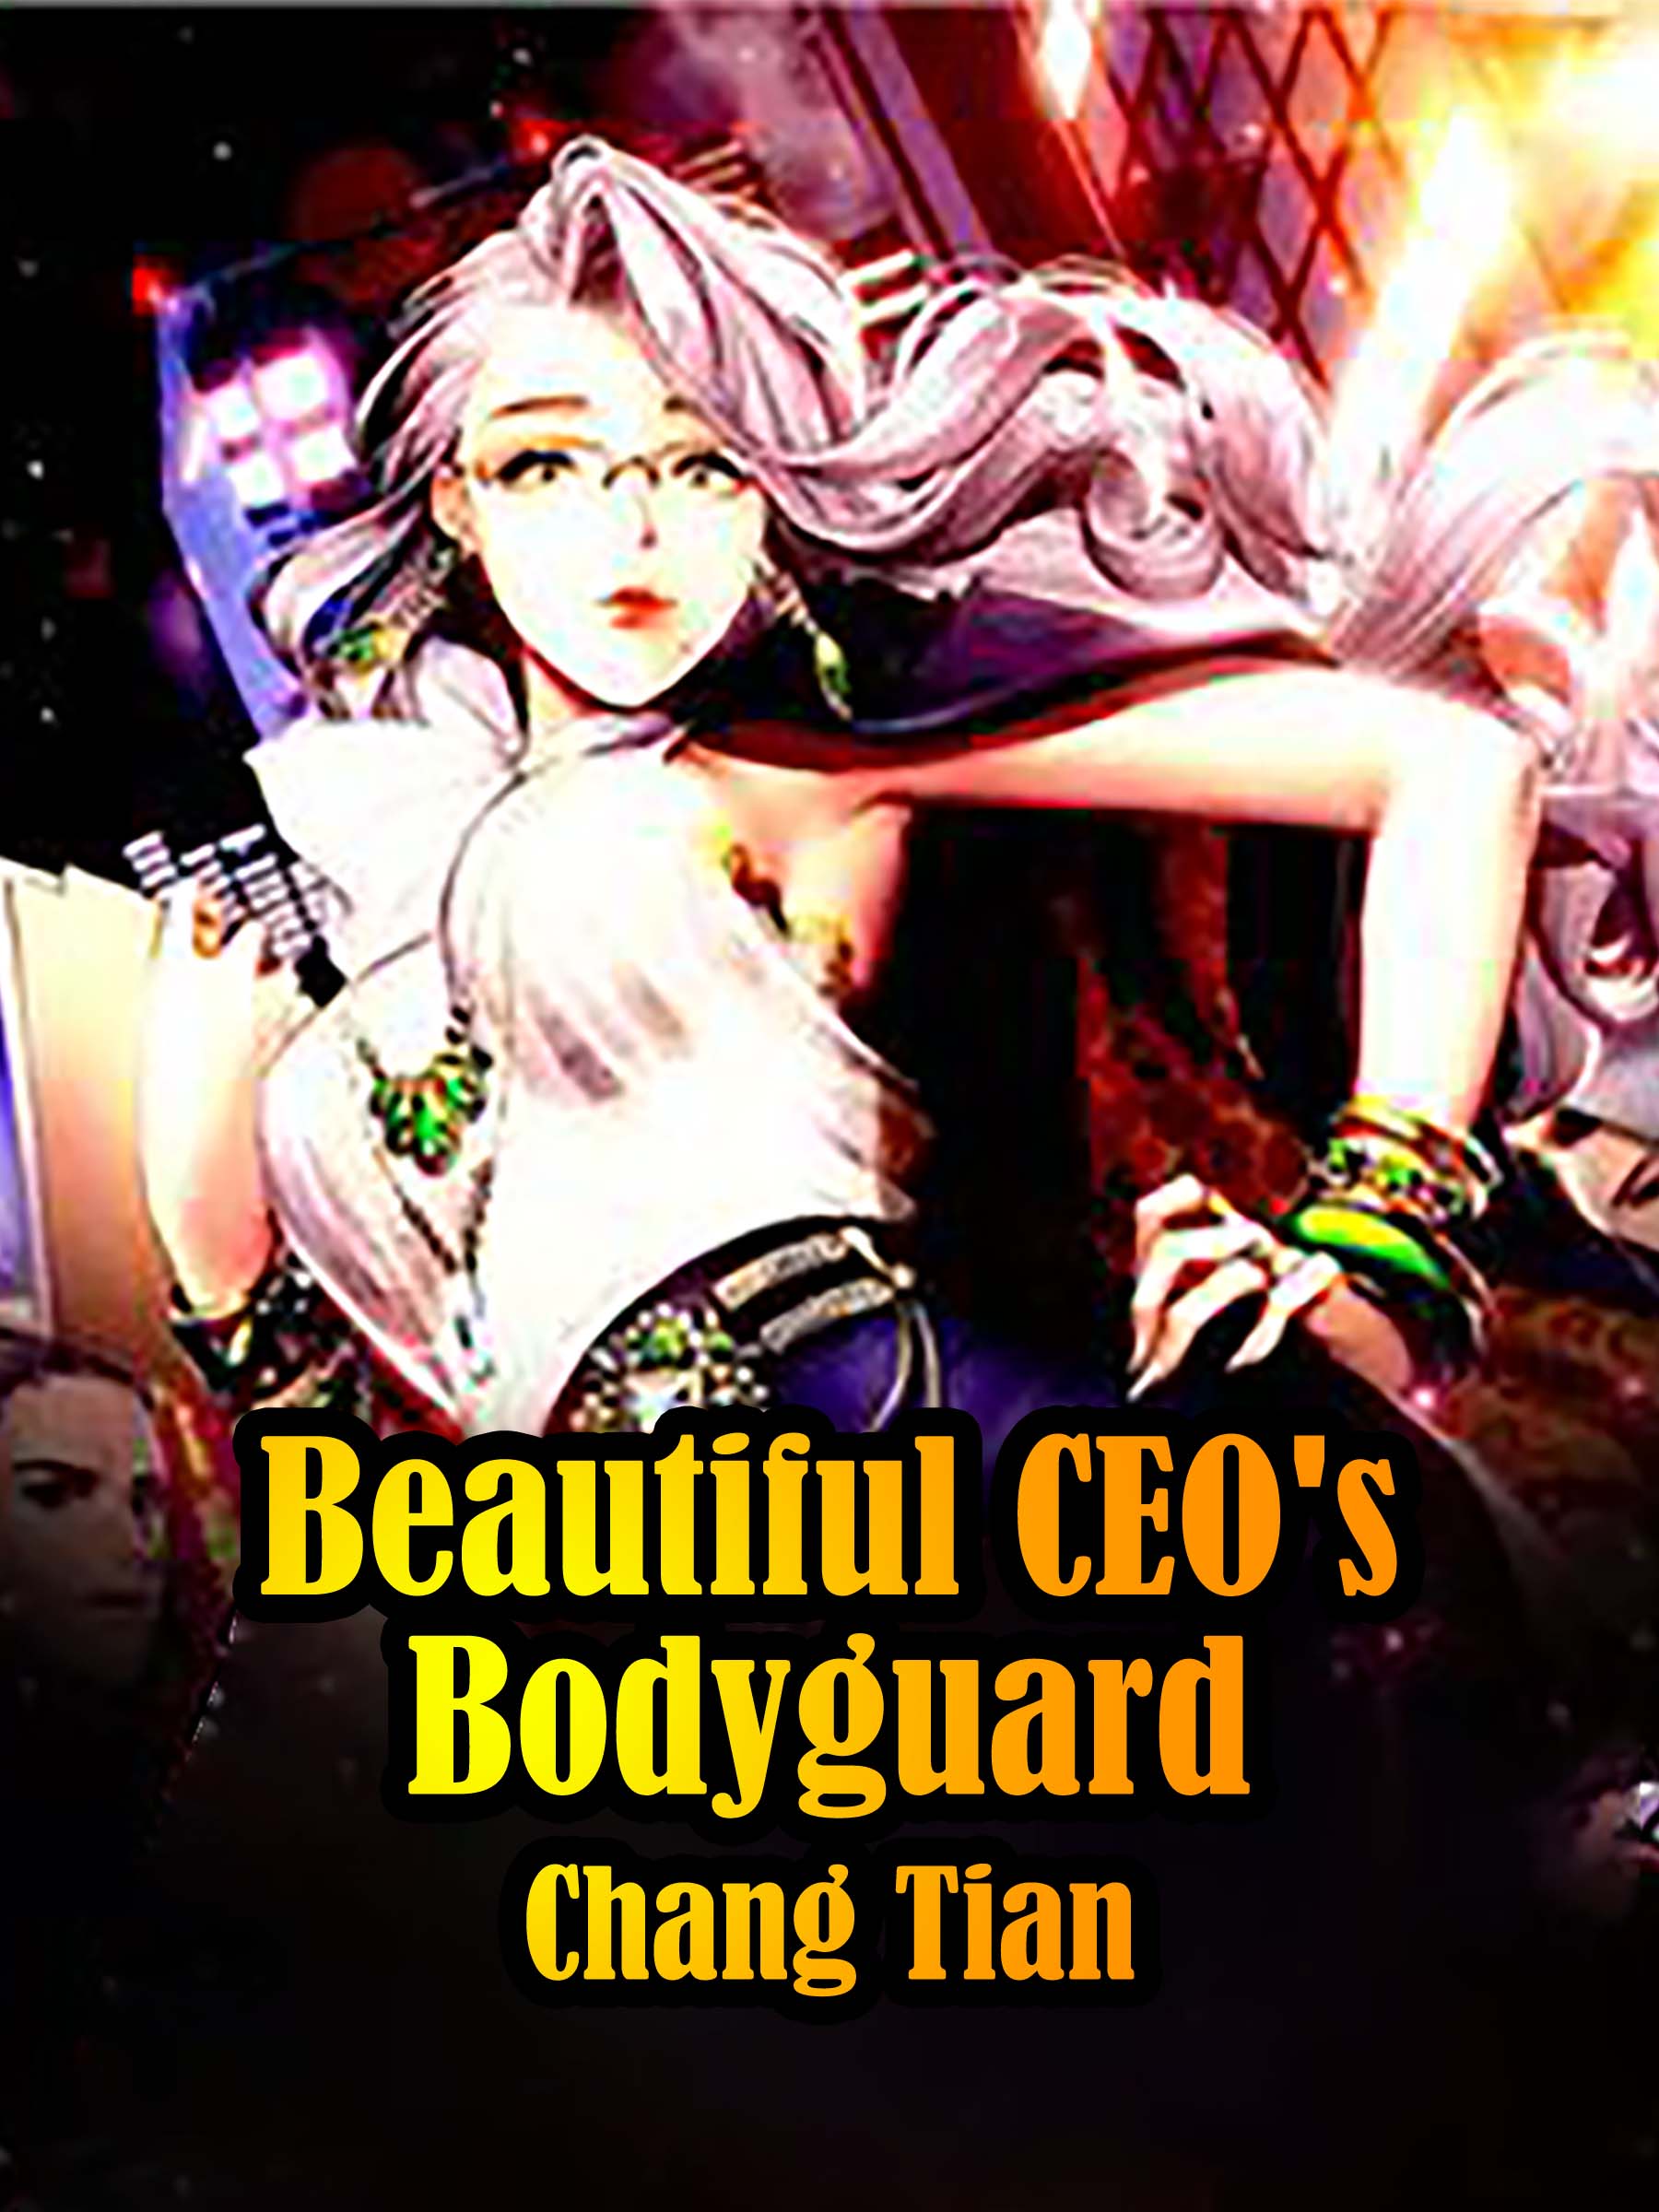 Ceo and bodyguard manhwa